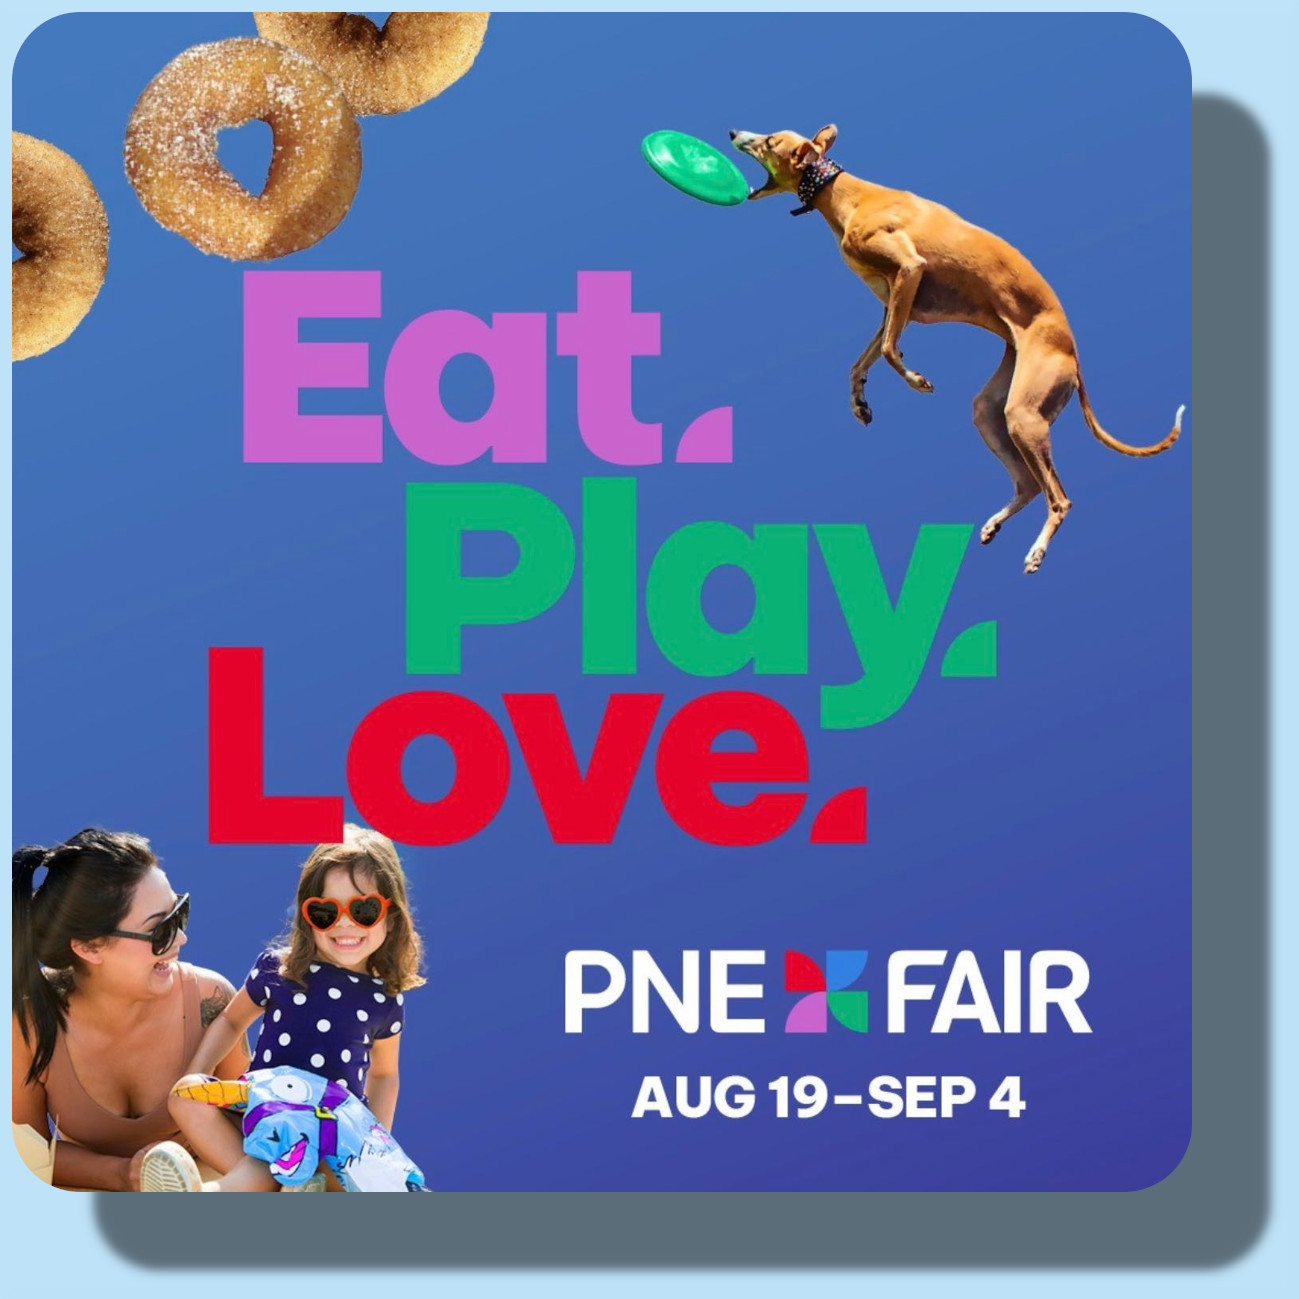 PNE Fair: Vancouver's Premier Event | August 19 - September 4